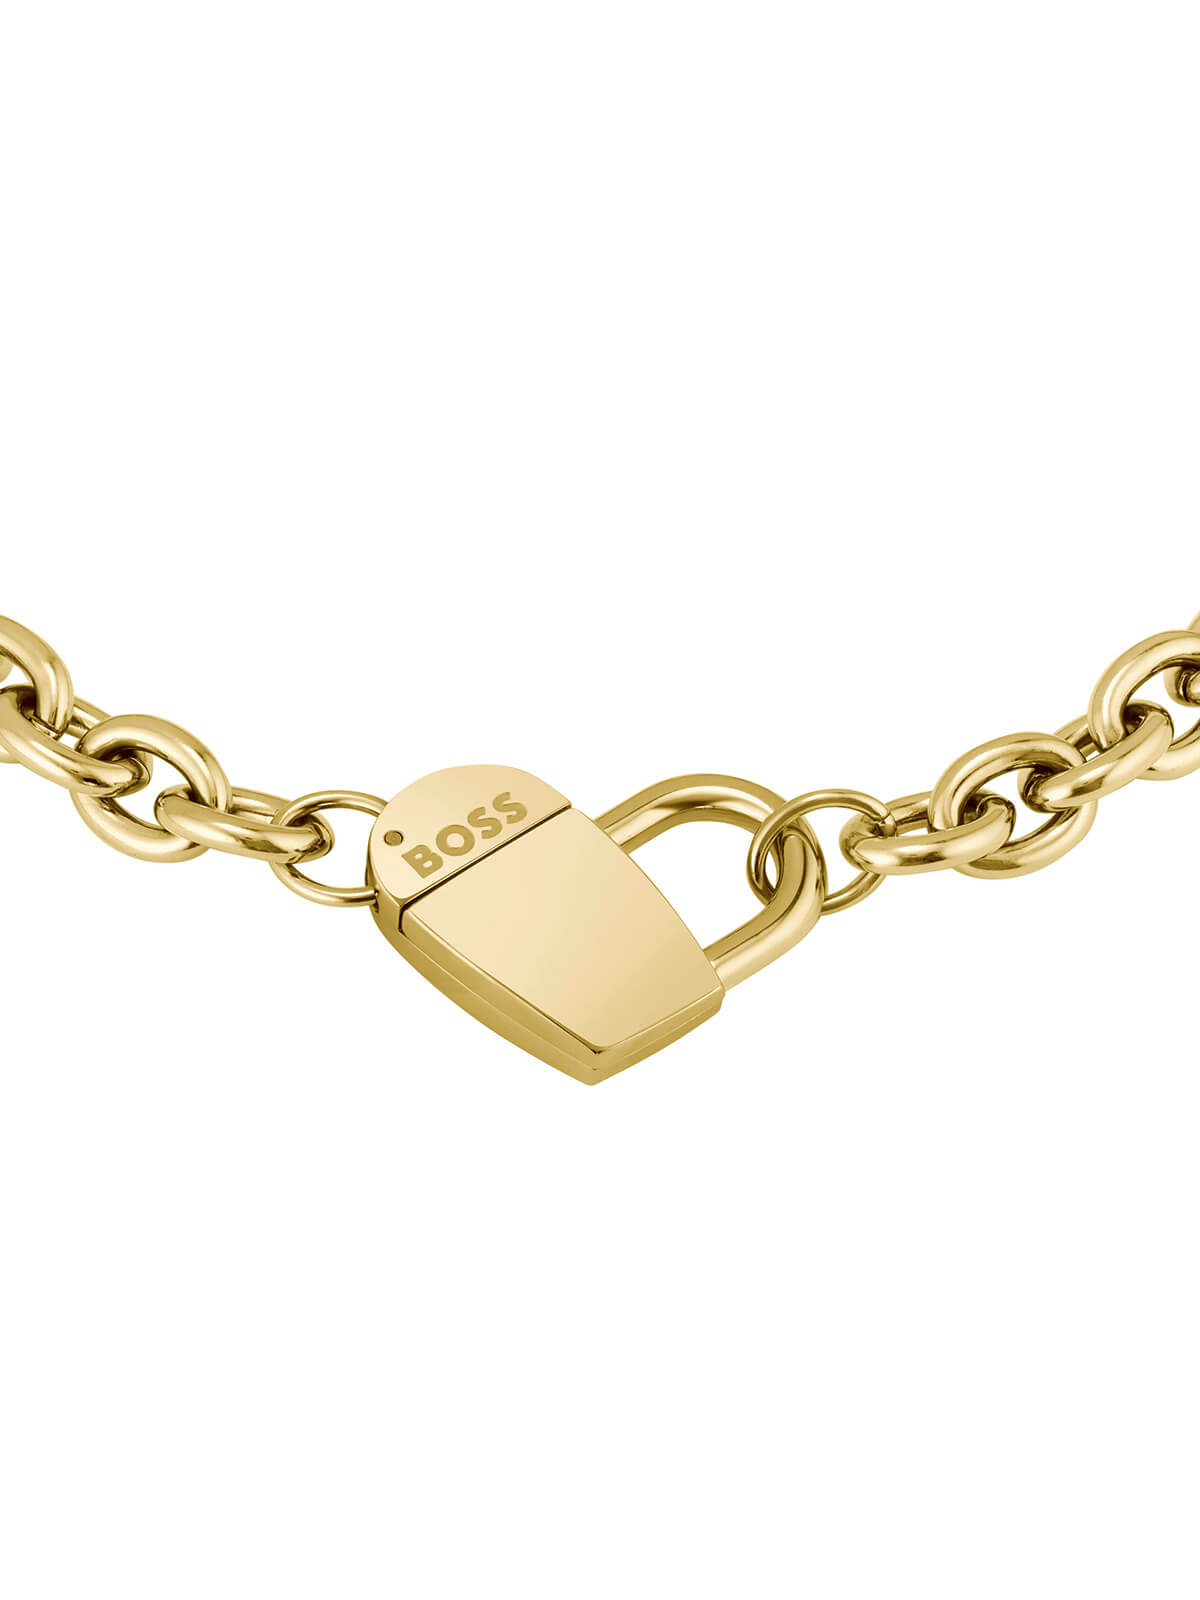 BOSS Dinya Bracelet in Gold Plating 1580419